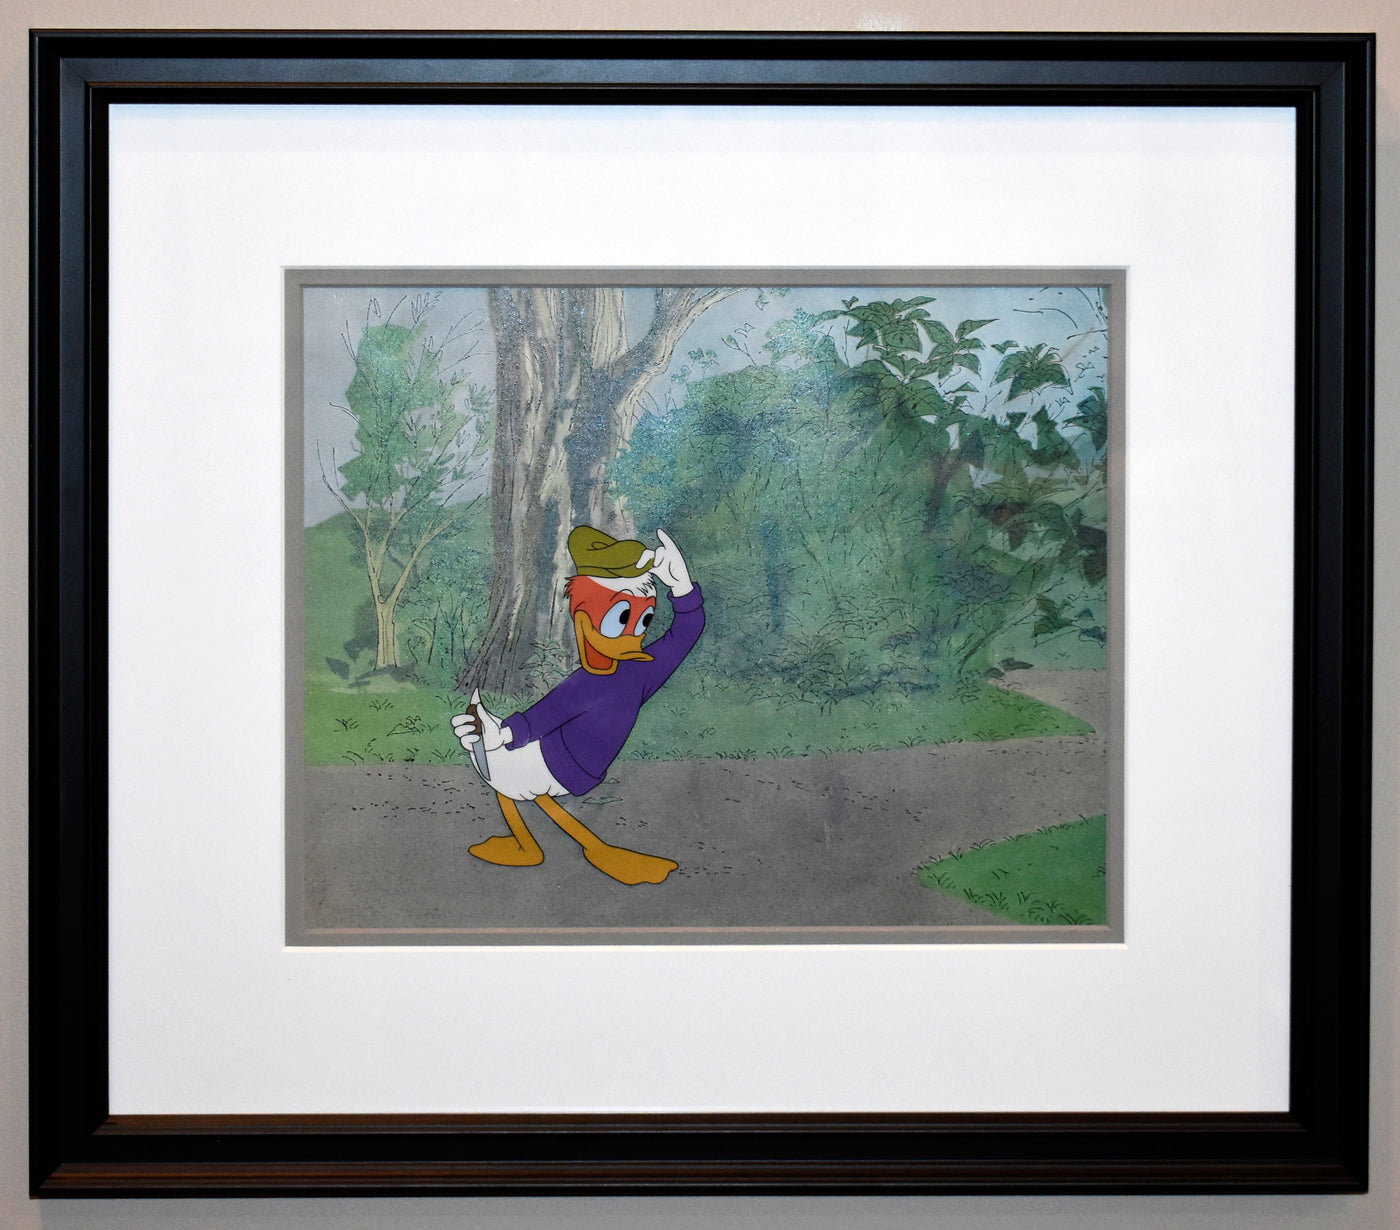 Original Walt Disney Production Cel on Color Copy Background featuring Donald Duck